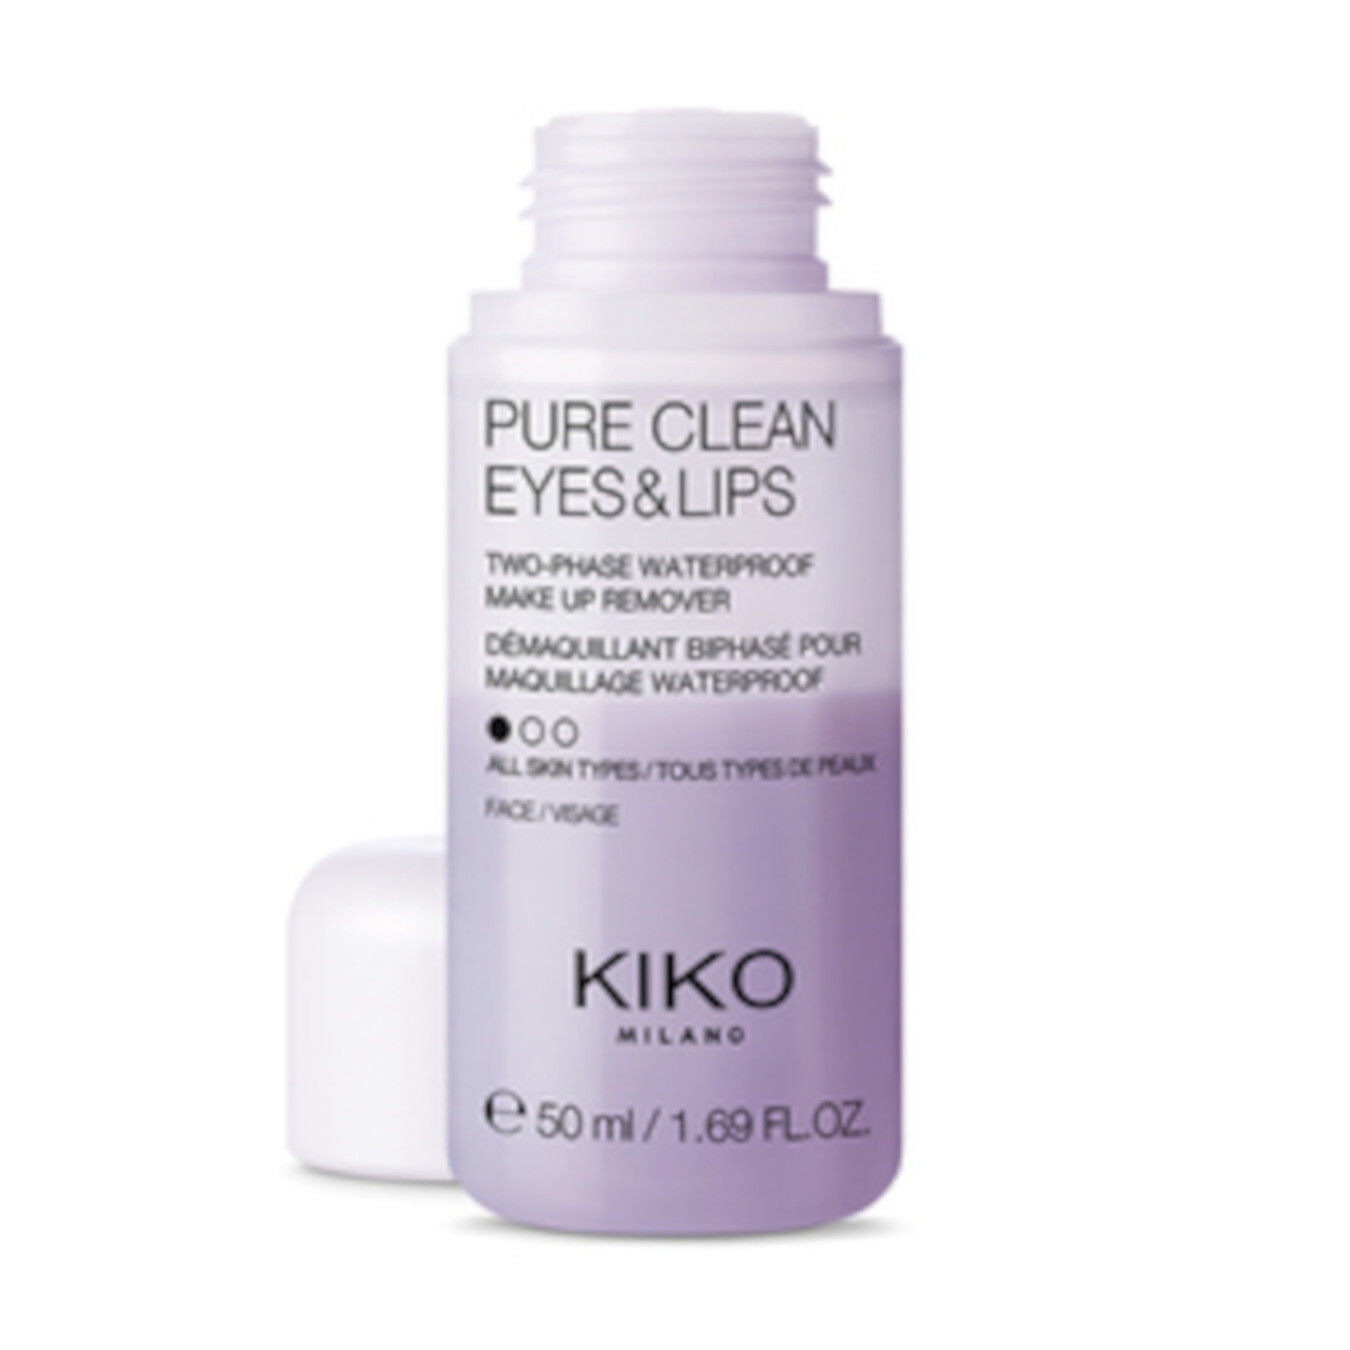 KIKO MILANO Pure Clean Eyes & Lips Mini Facial Cleansers 1ST Damen von Kiko Milano